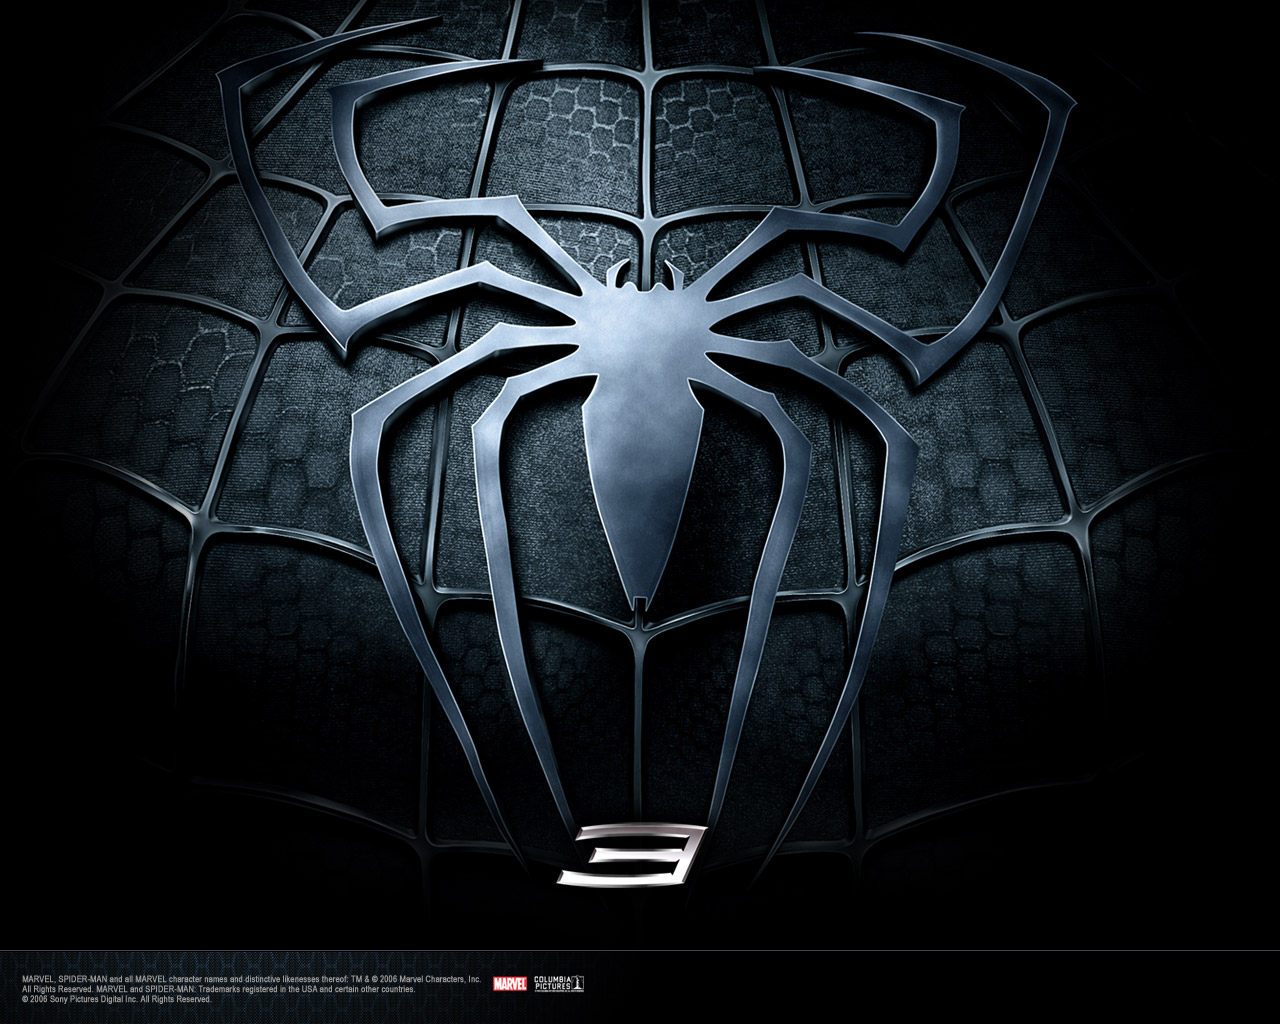 Free Download Windows 8 Themes: Black Spiderman 3 Theme